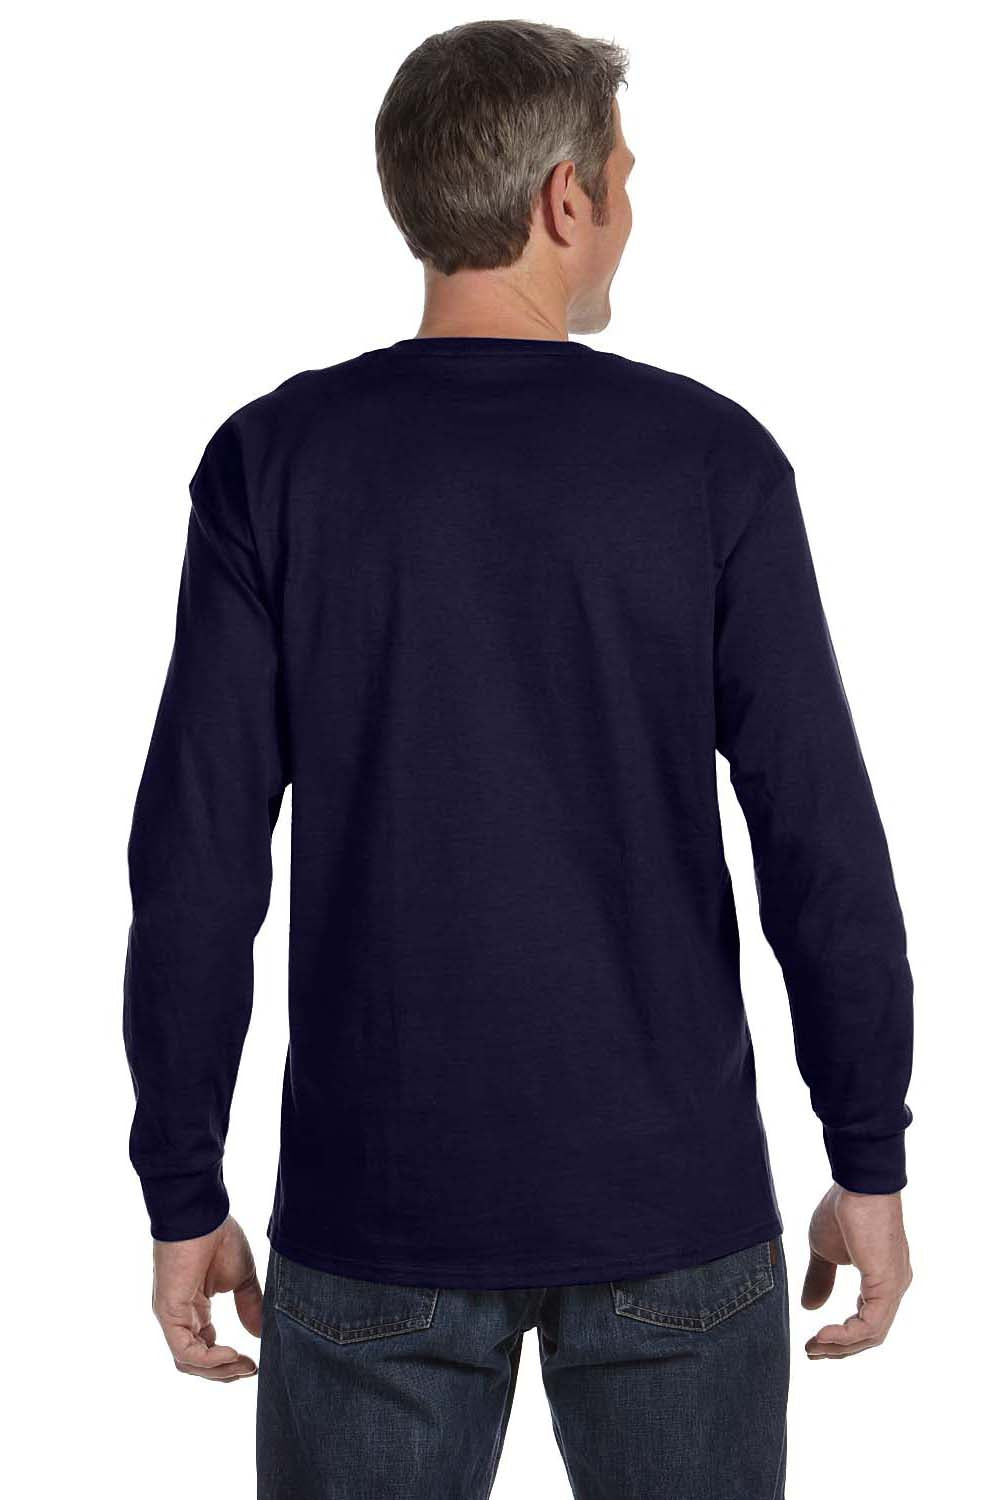 Hanes 5586 Mens ComfortSoft Long Sleeve Crewneck T-Shirt Navy Blue Back